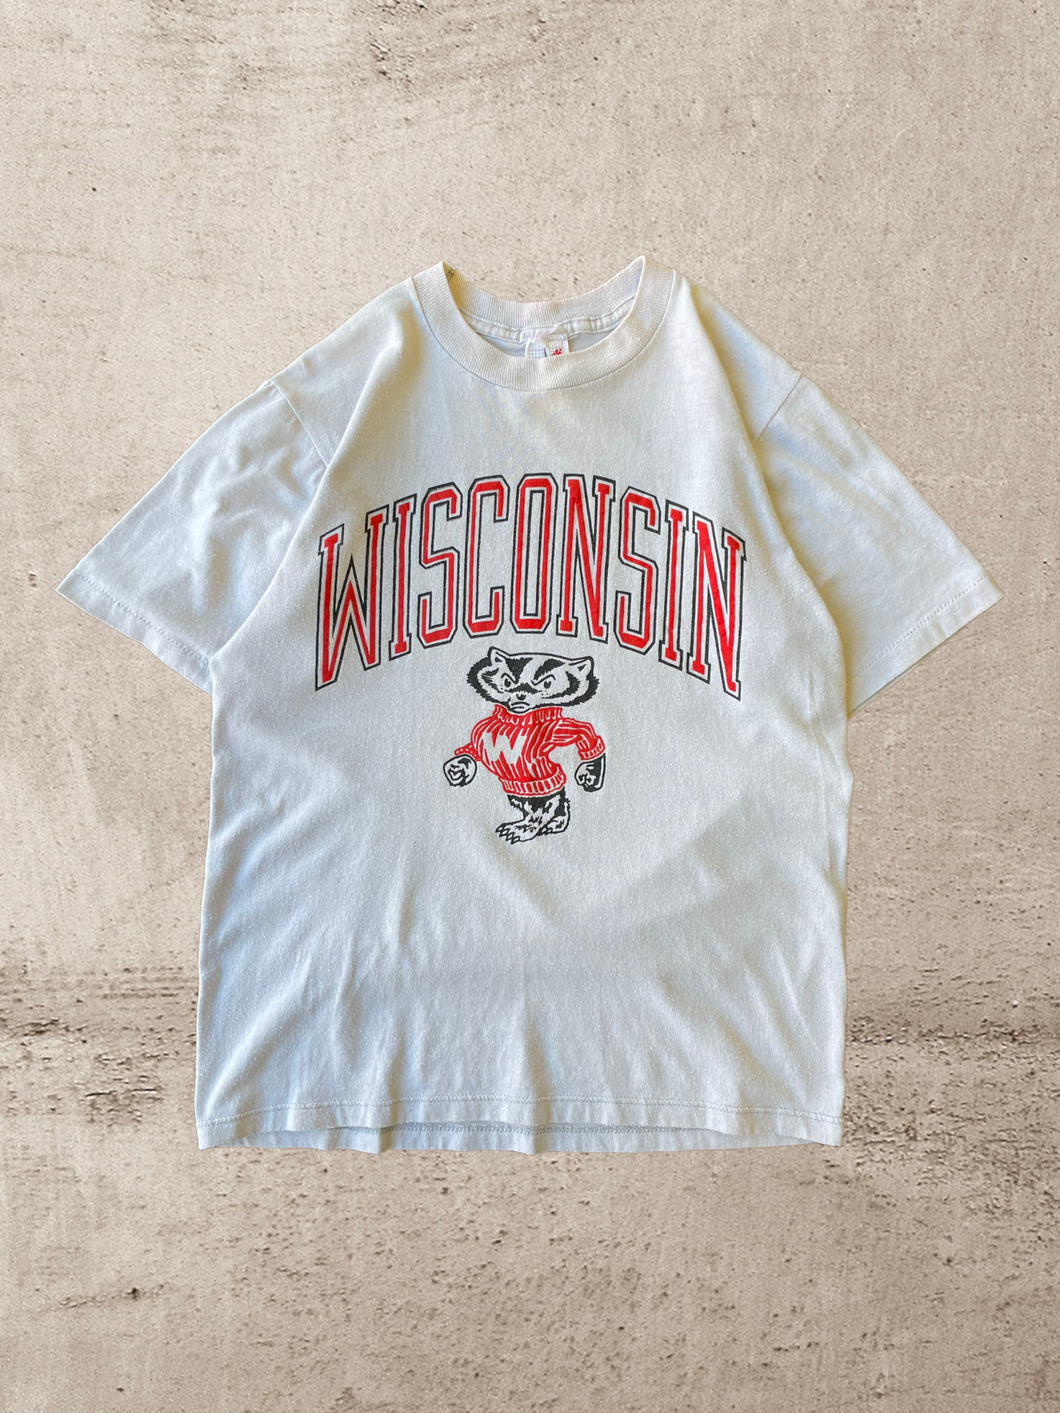 80s University of Wisconsin T-Shirt - Medium